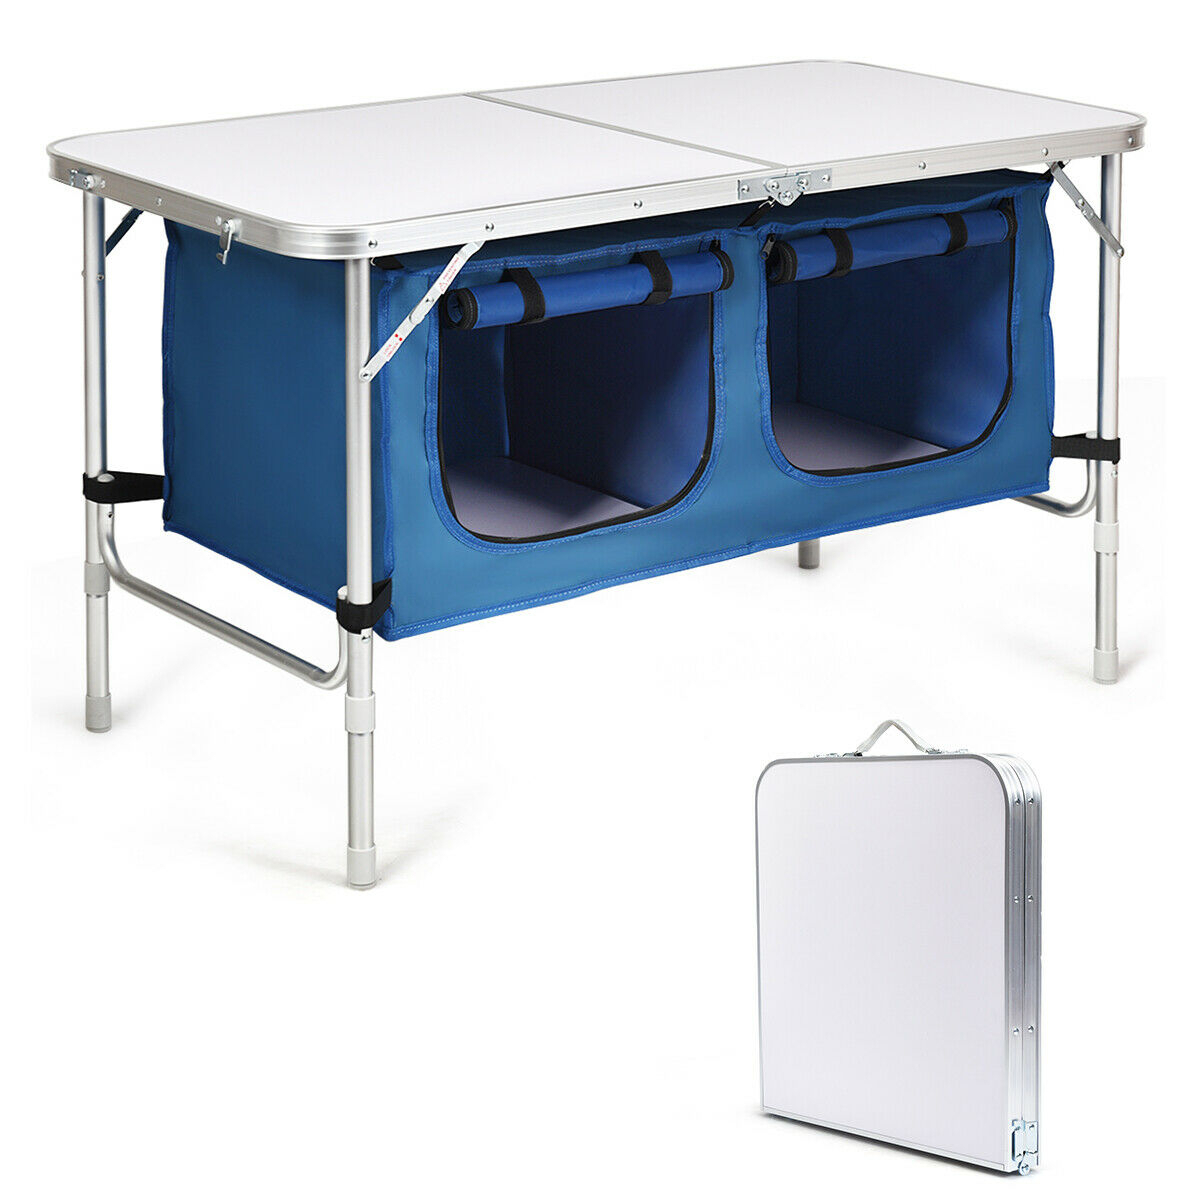 Folding Camping Table Aluminum Height Adjustable W/ Storage Organizer Dark Blue